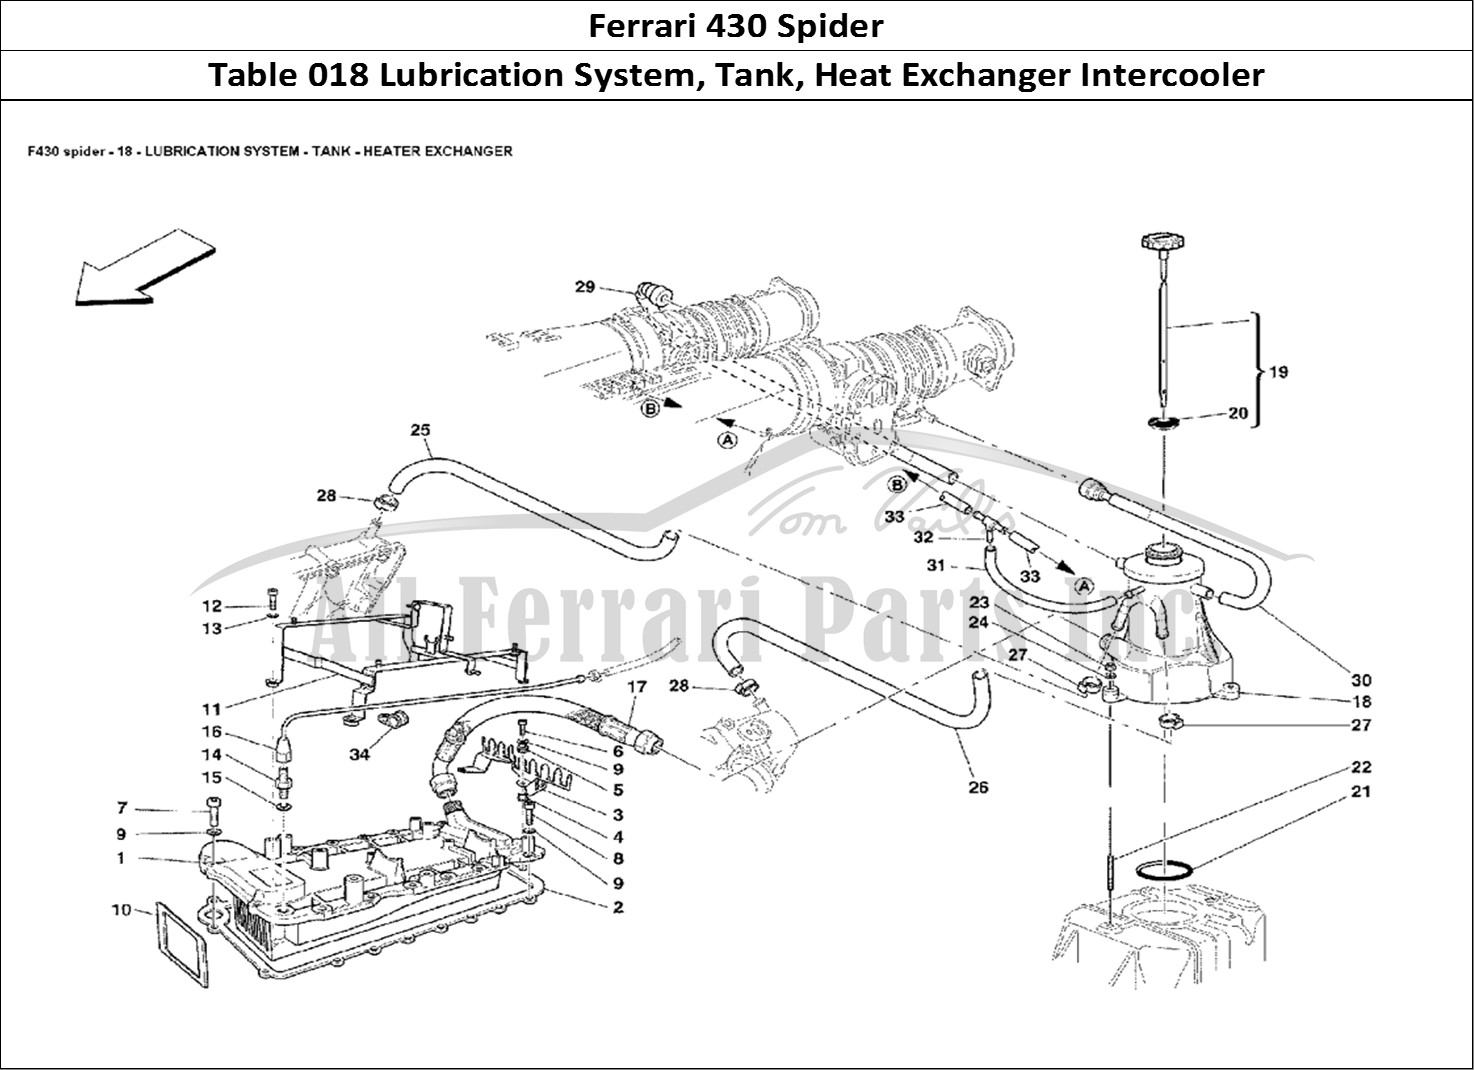 Ferrari Parts Ferrari 430 Spider Page 018 Lubrication System - Tank